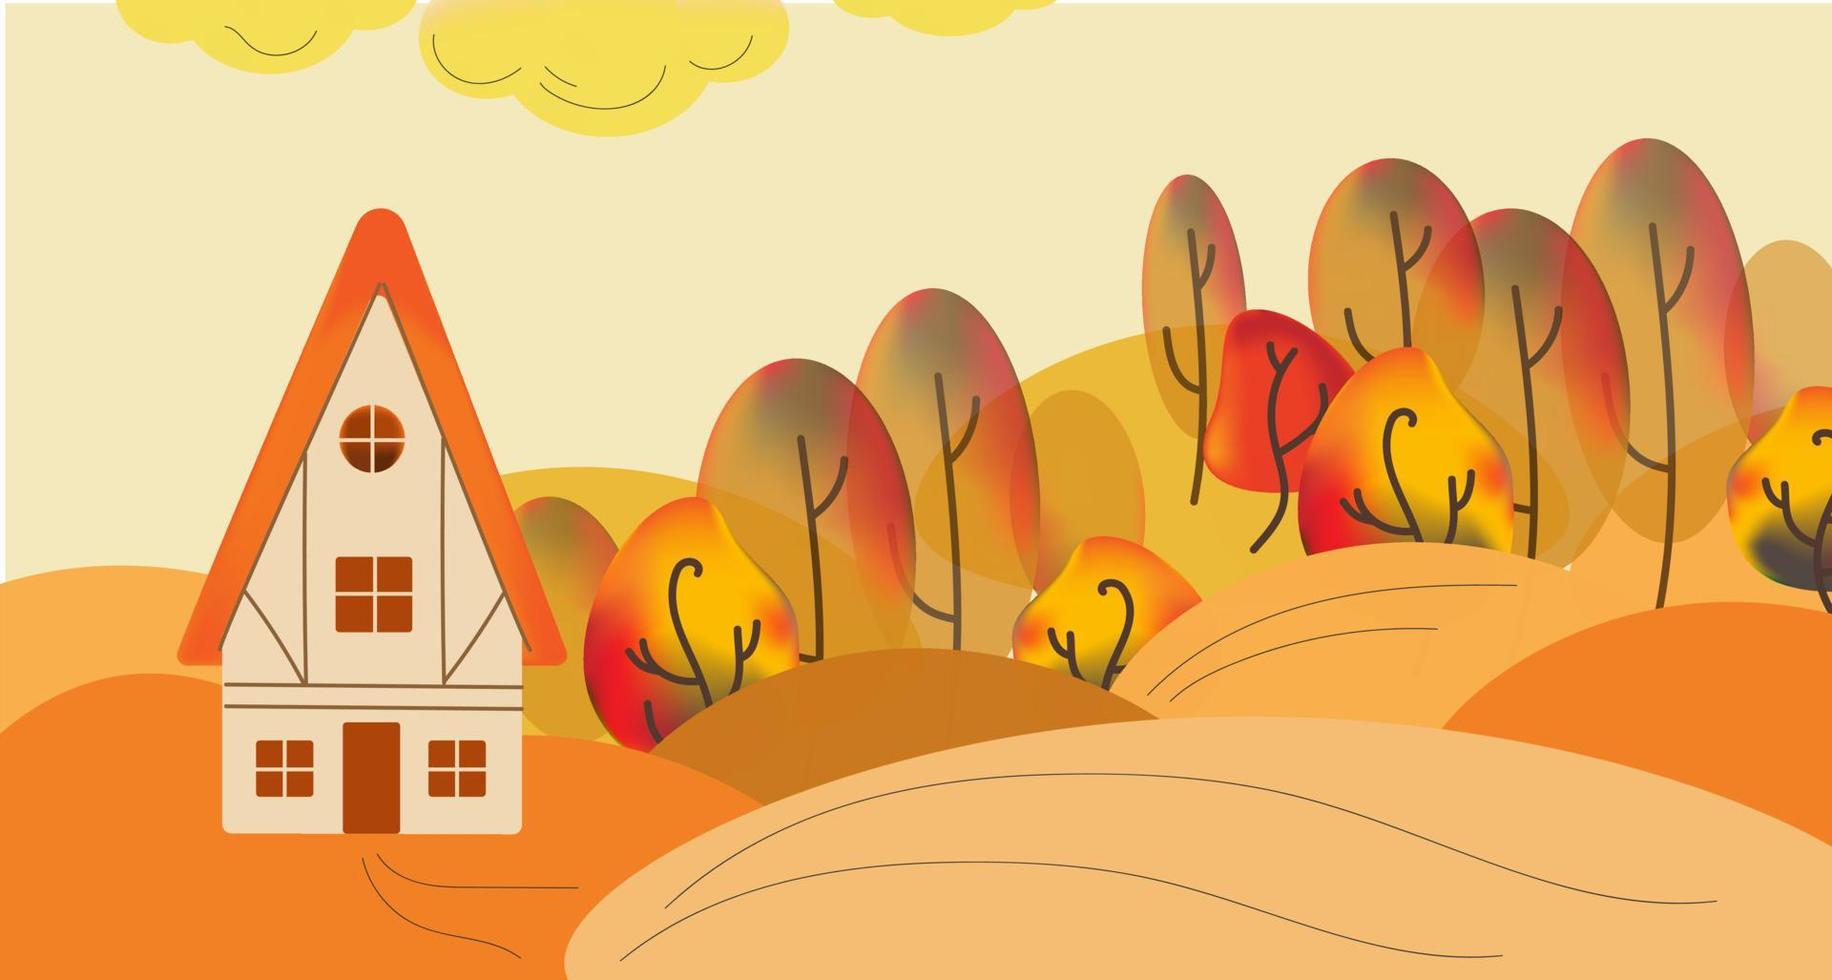 Hello Autumn, Abstract fall banner, Vector illustration of horizontal banner of autumn landscape